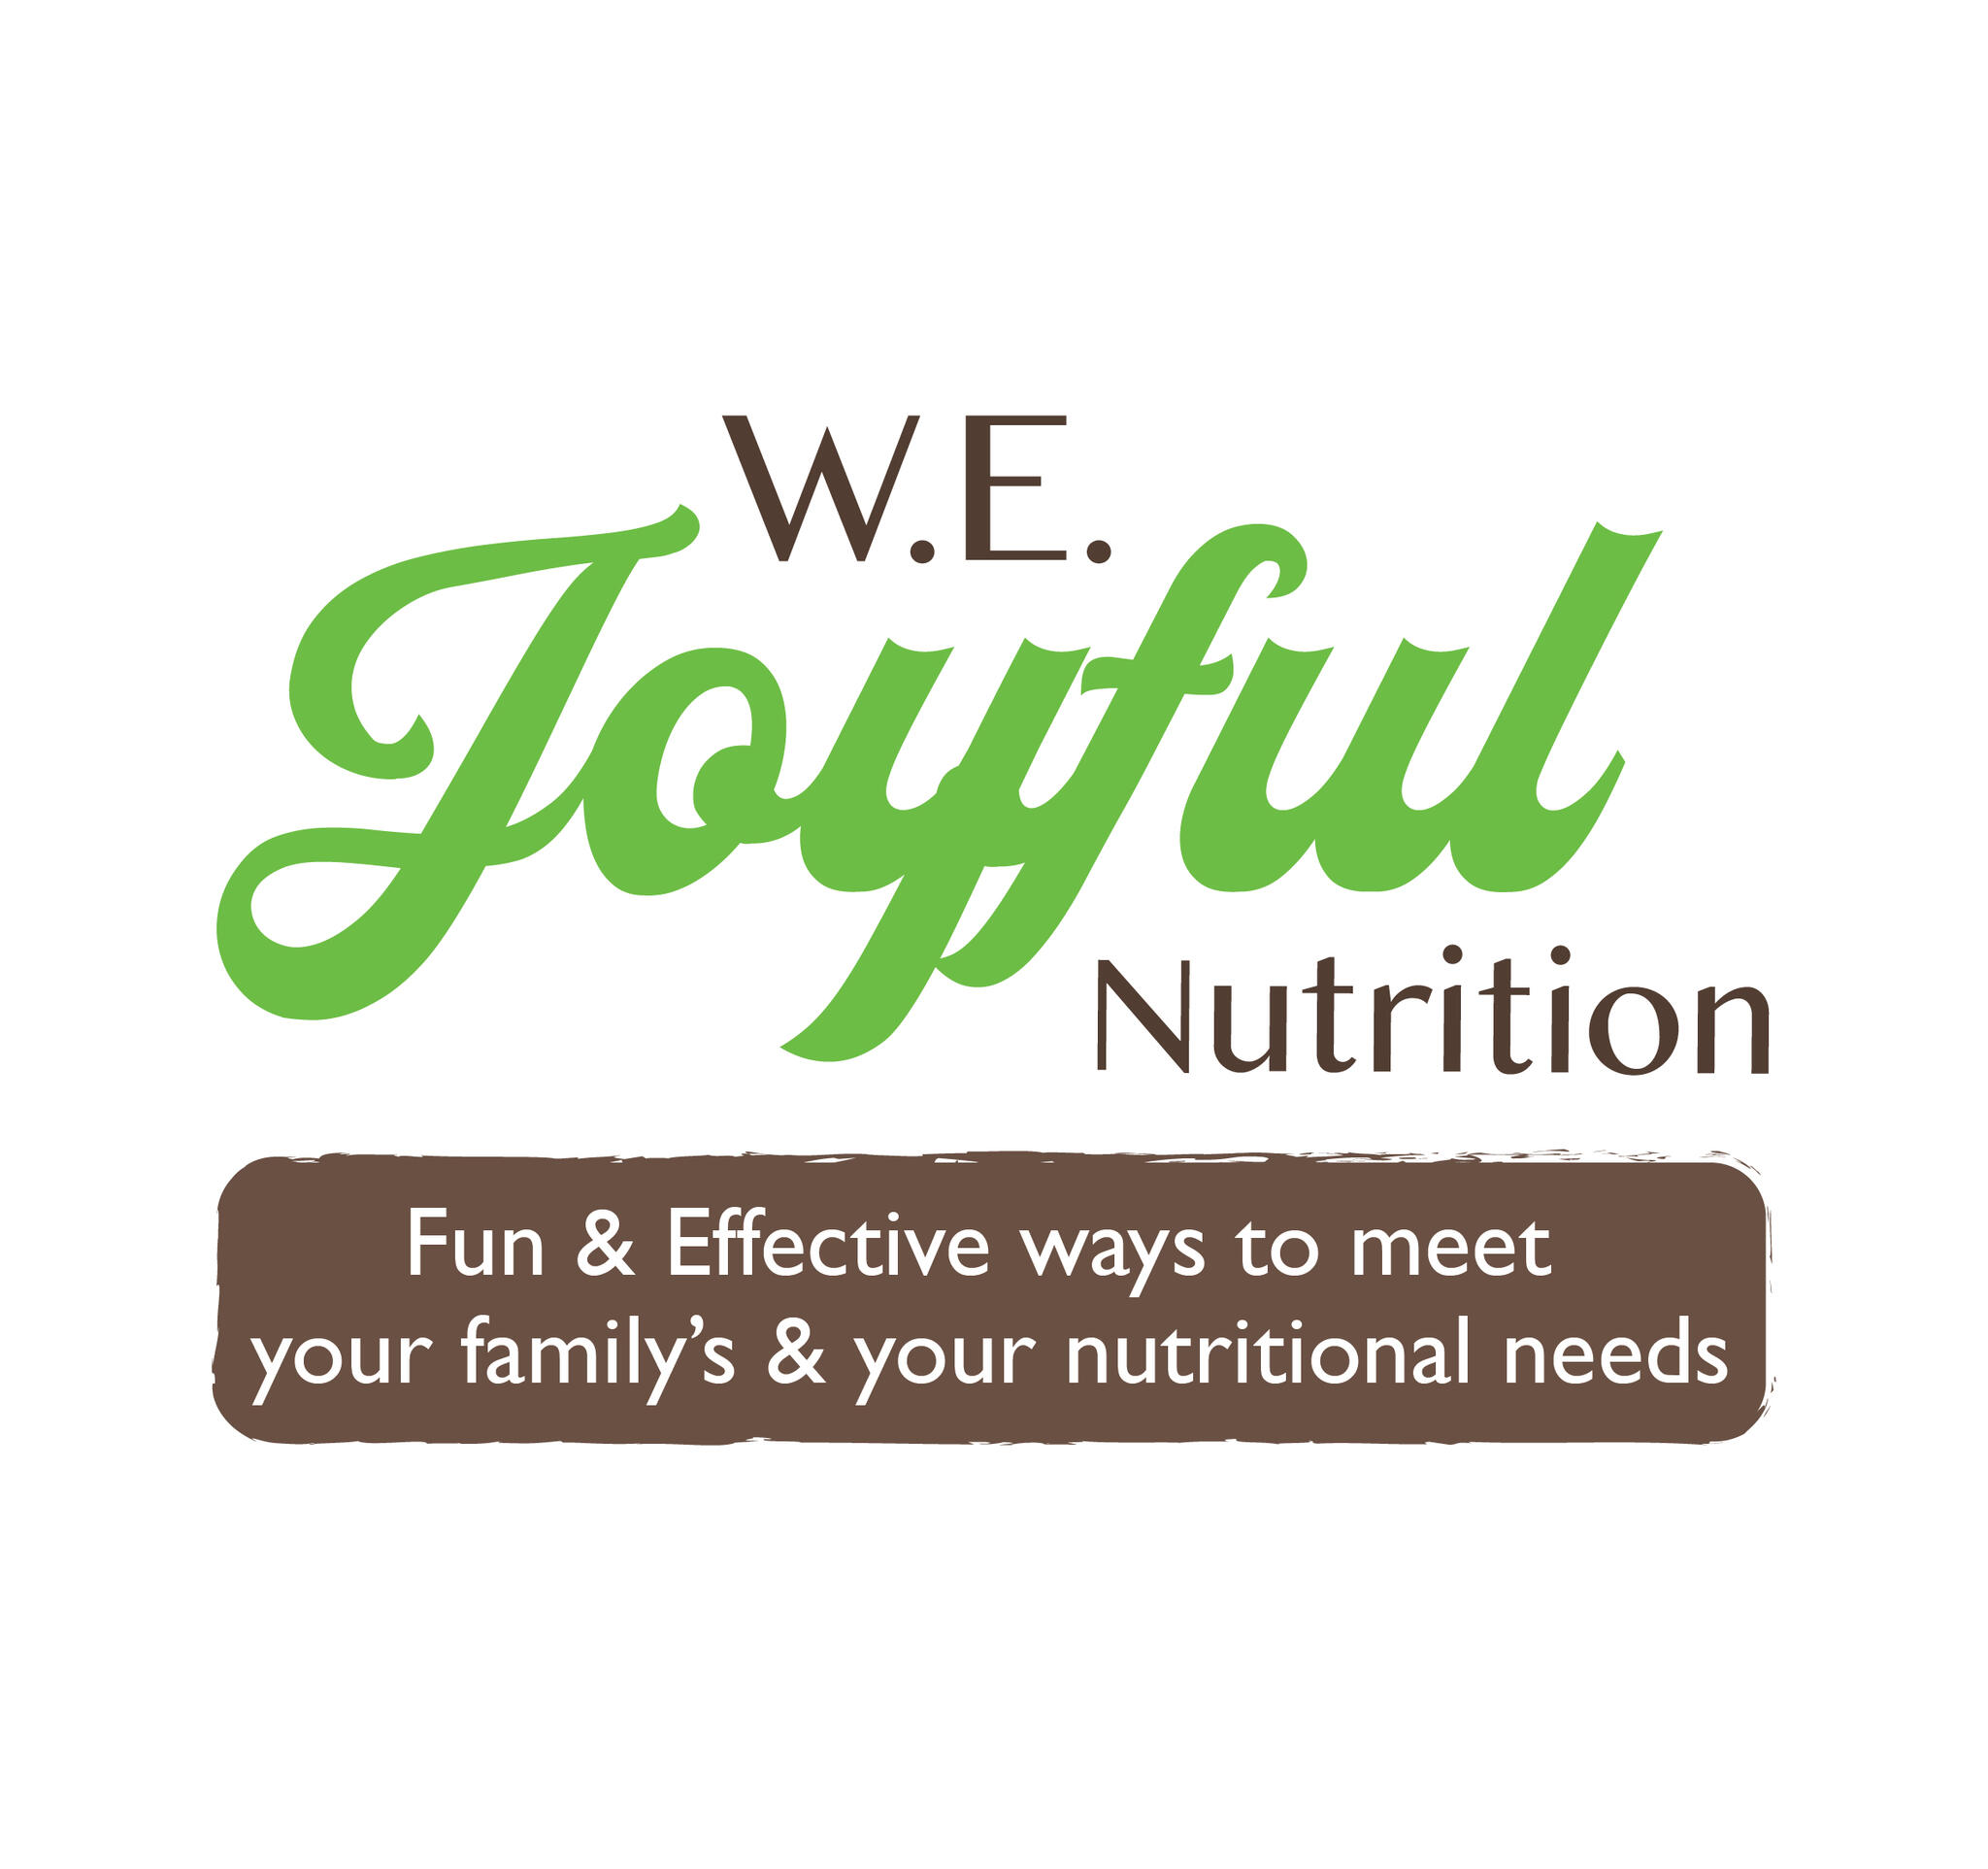 herbalife nutrition club logo